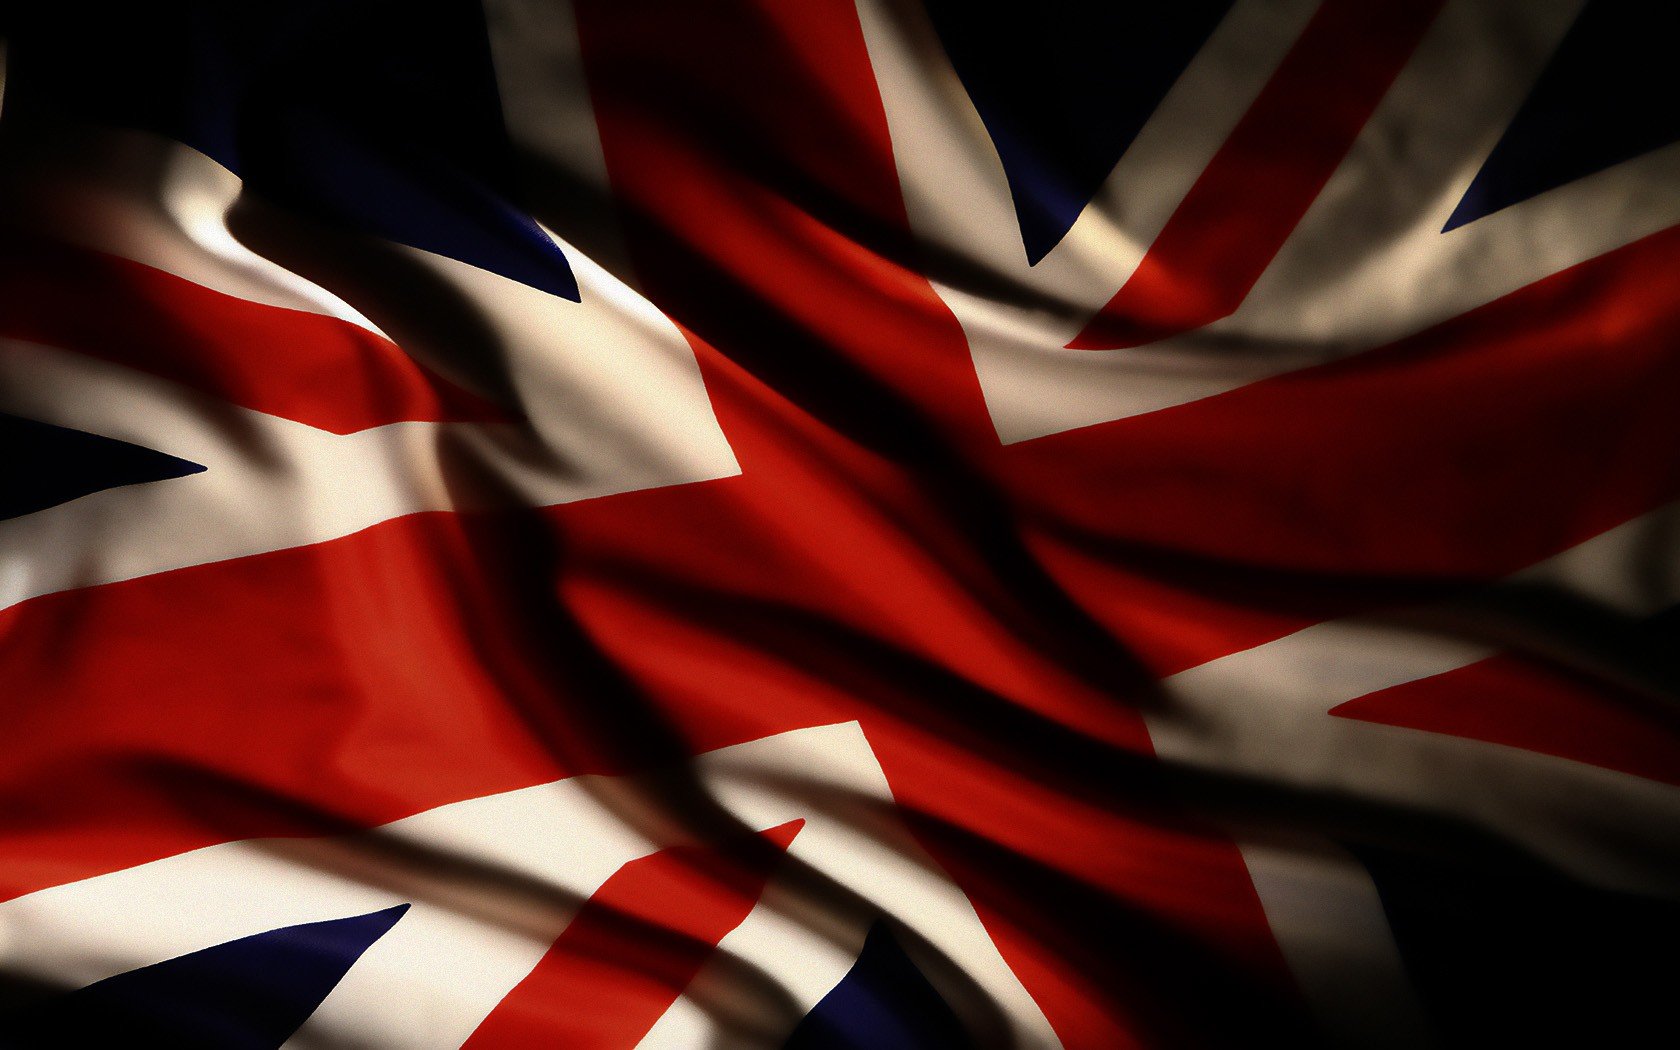 Flags United Kingdom Union Jack wallpaper 1680x1050 323433